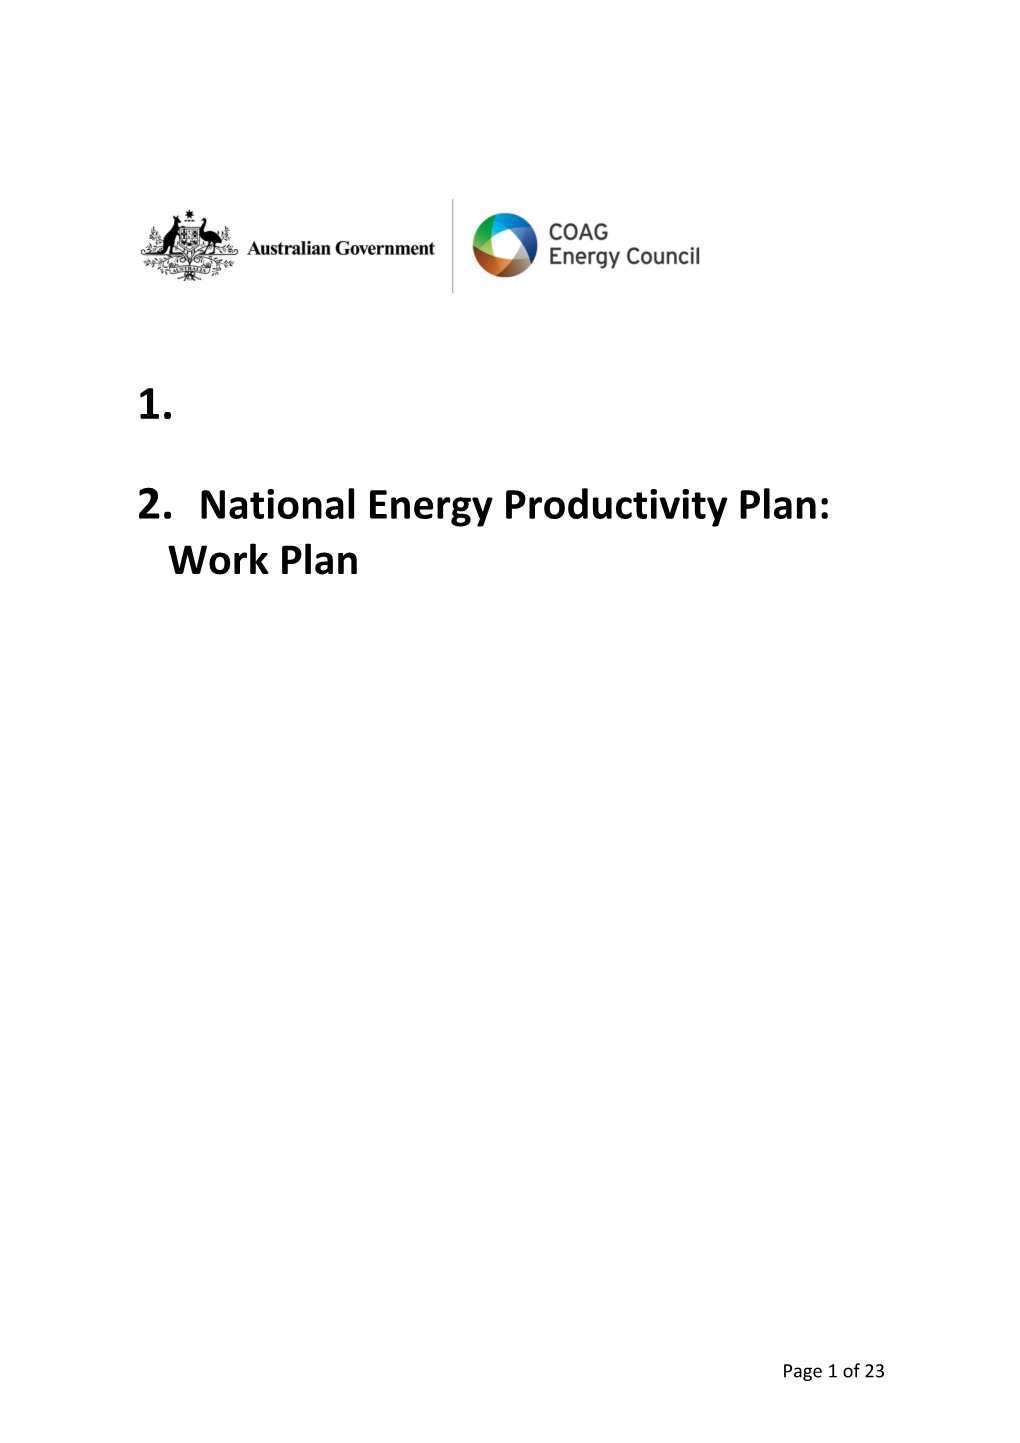 National Energy Productivity Plan: Work Plan